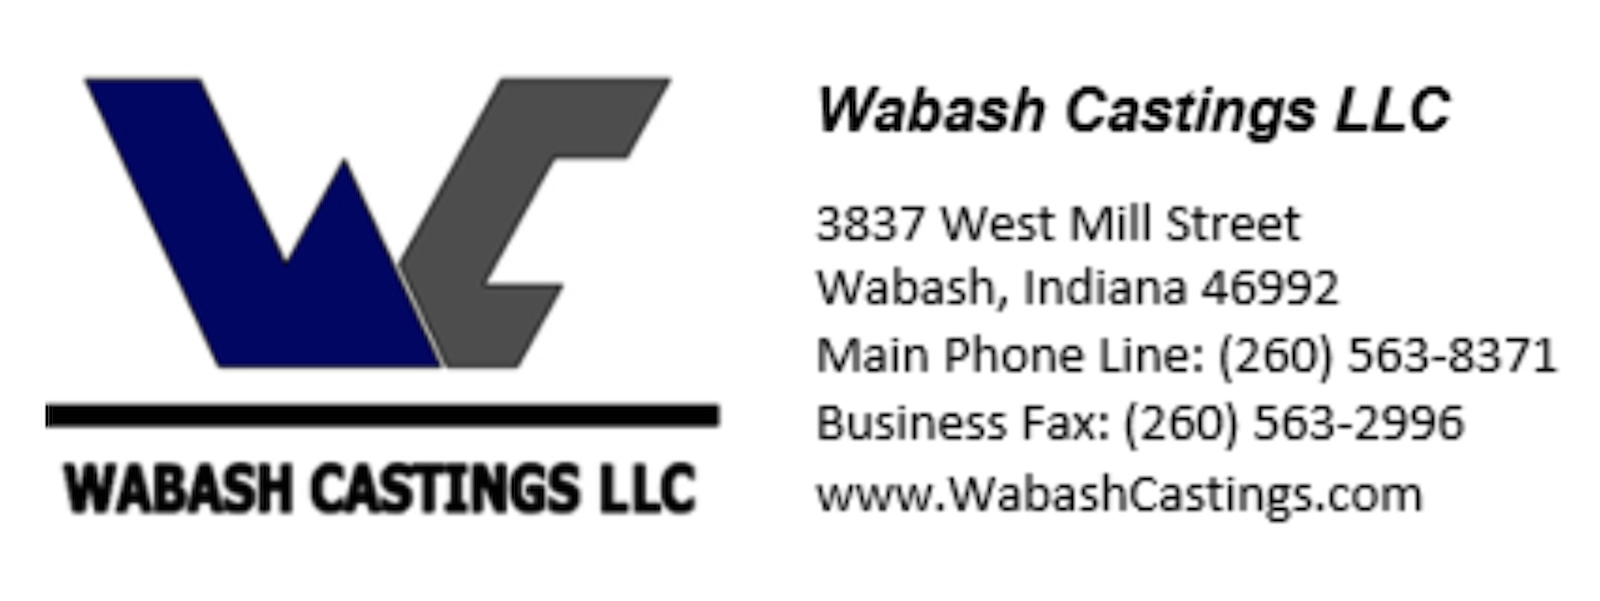 Wabash Castings